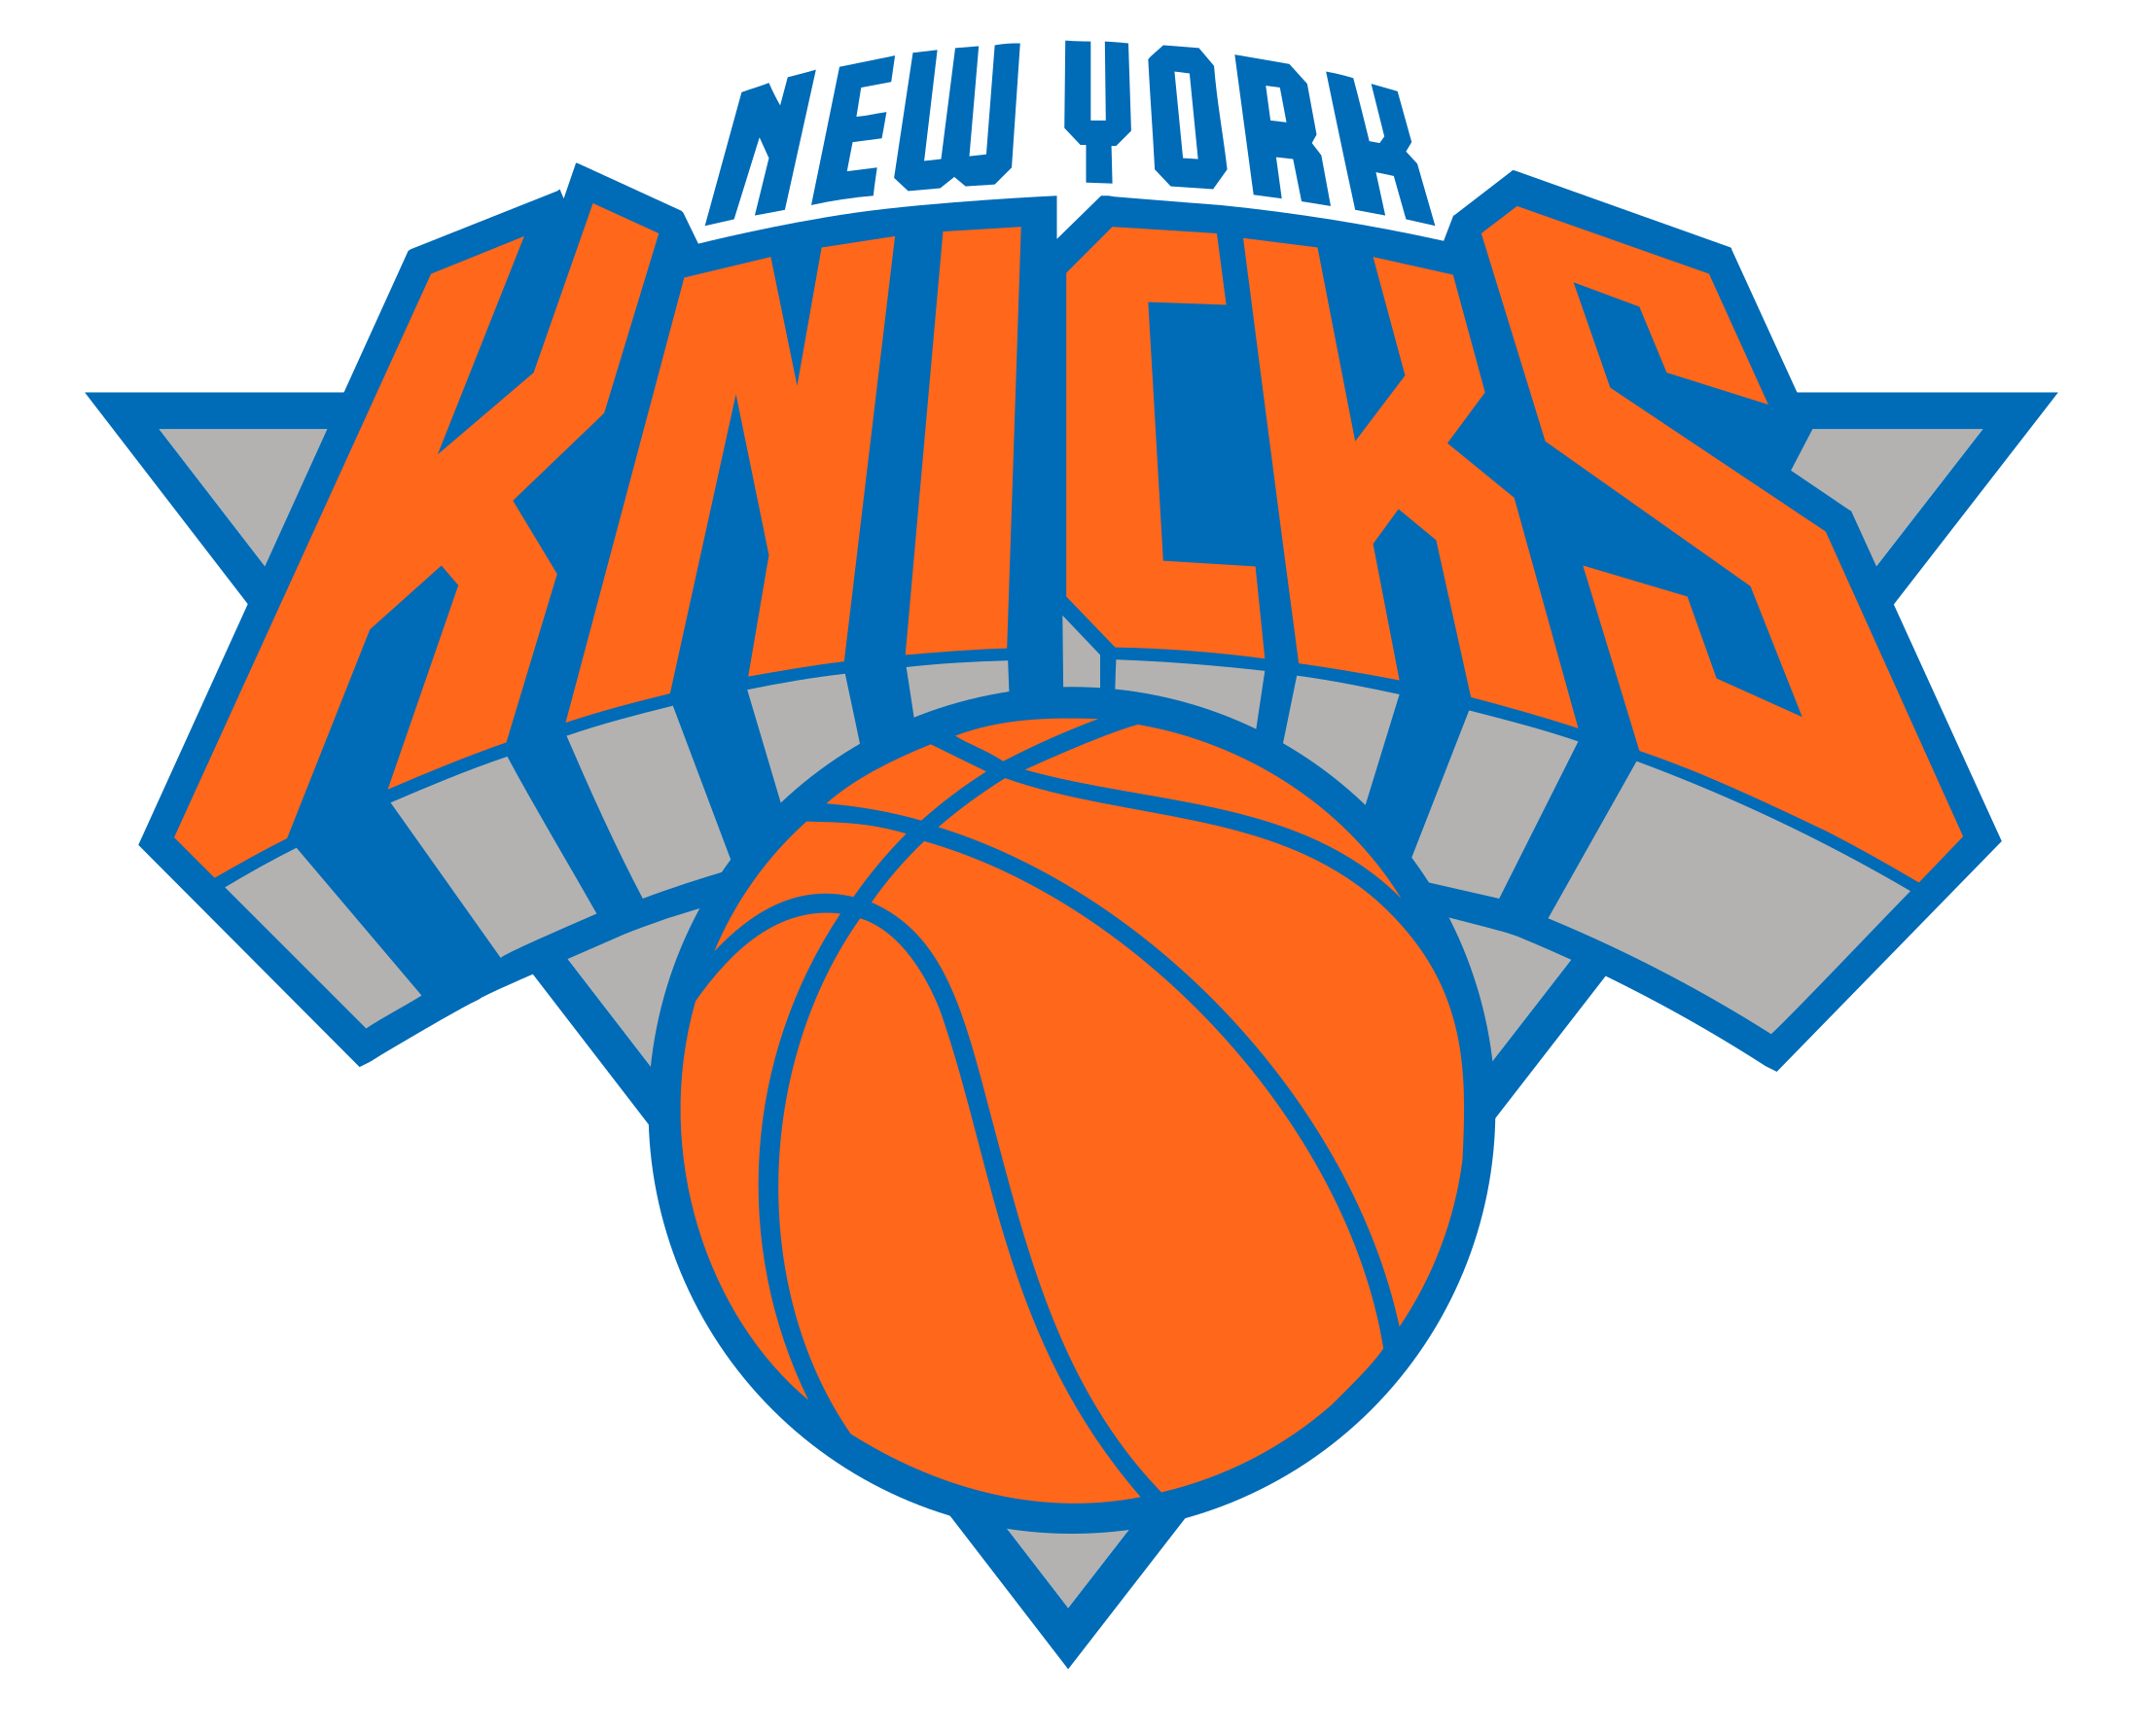 New York Knicks Basketball Logo PNG image